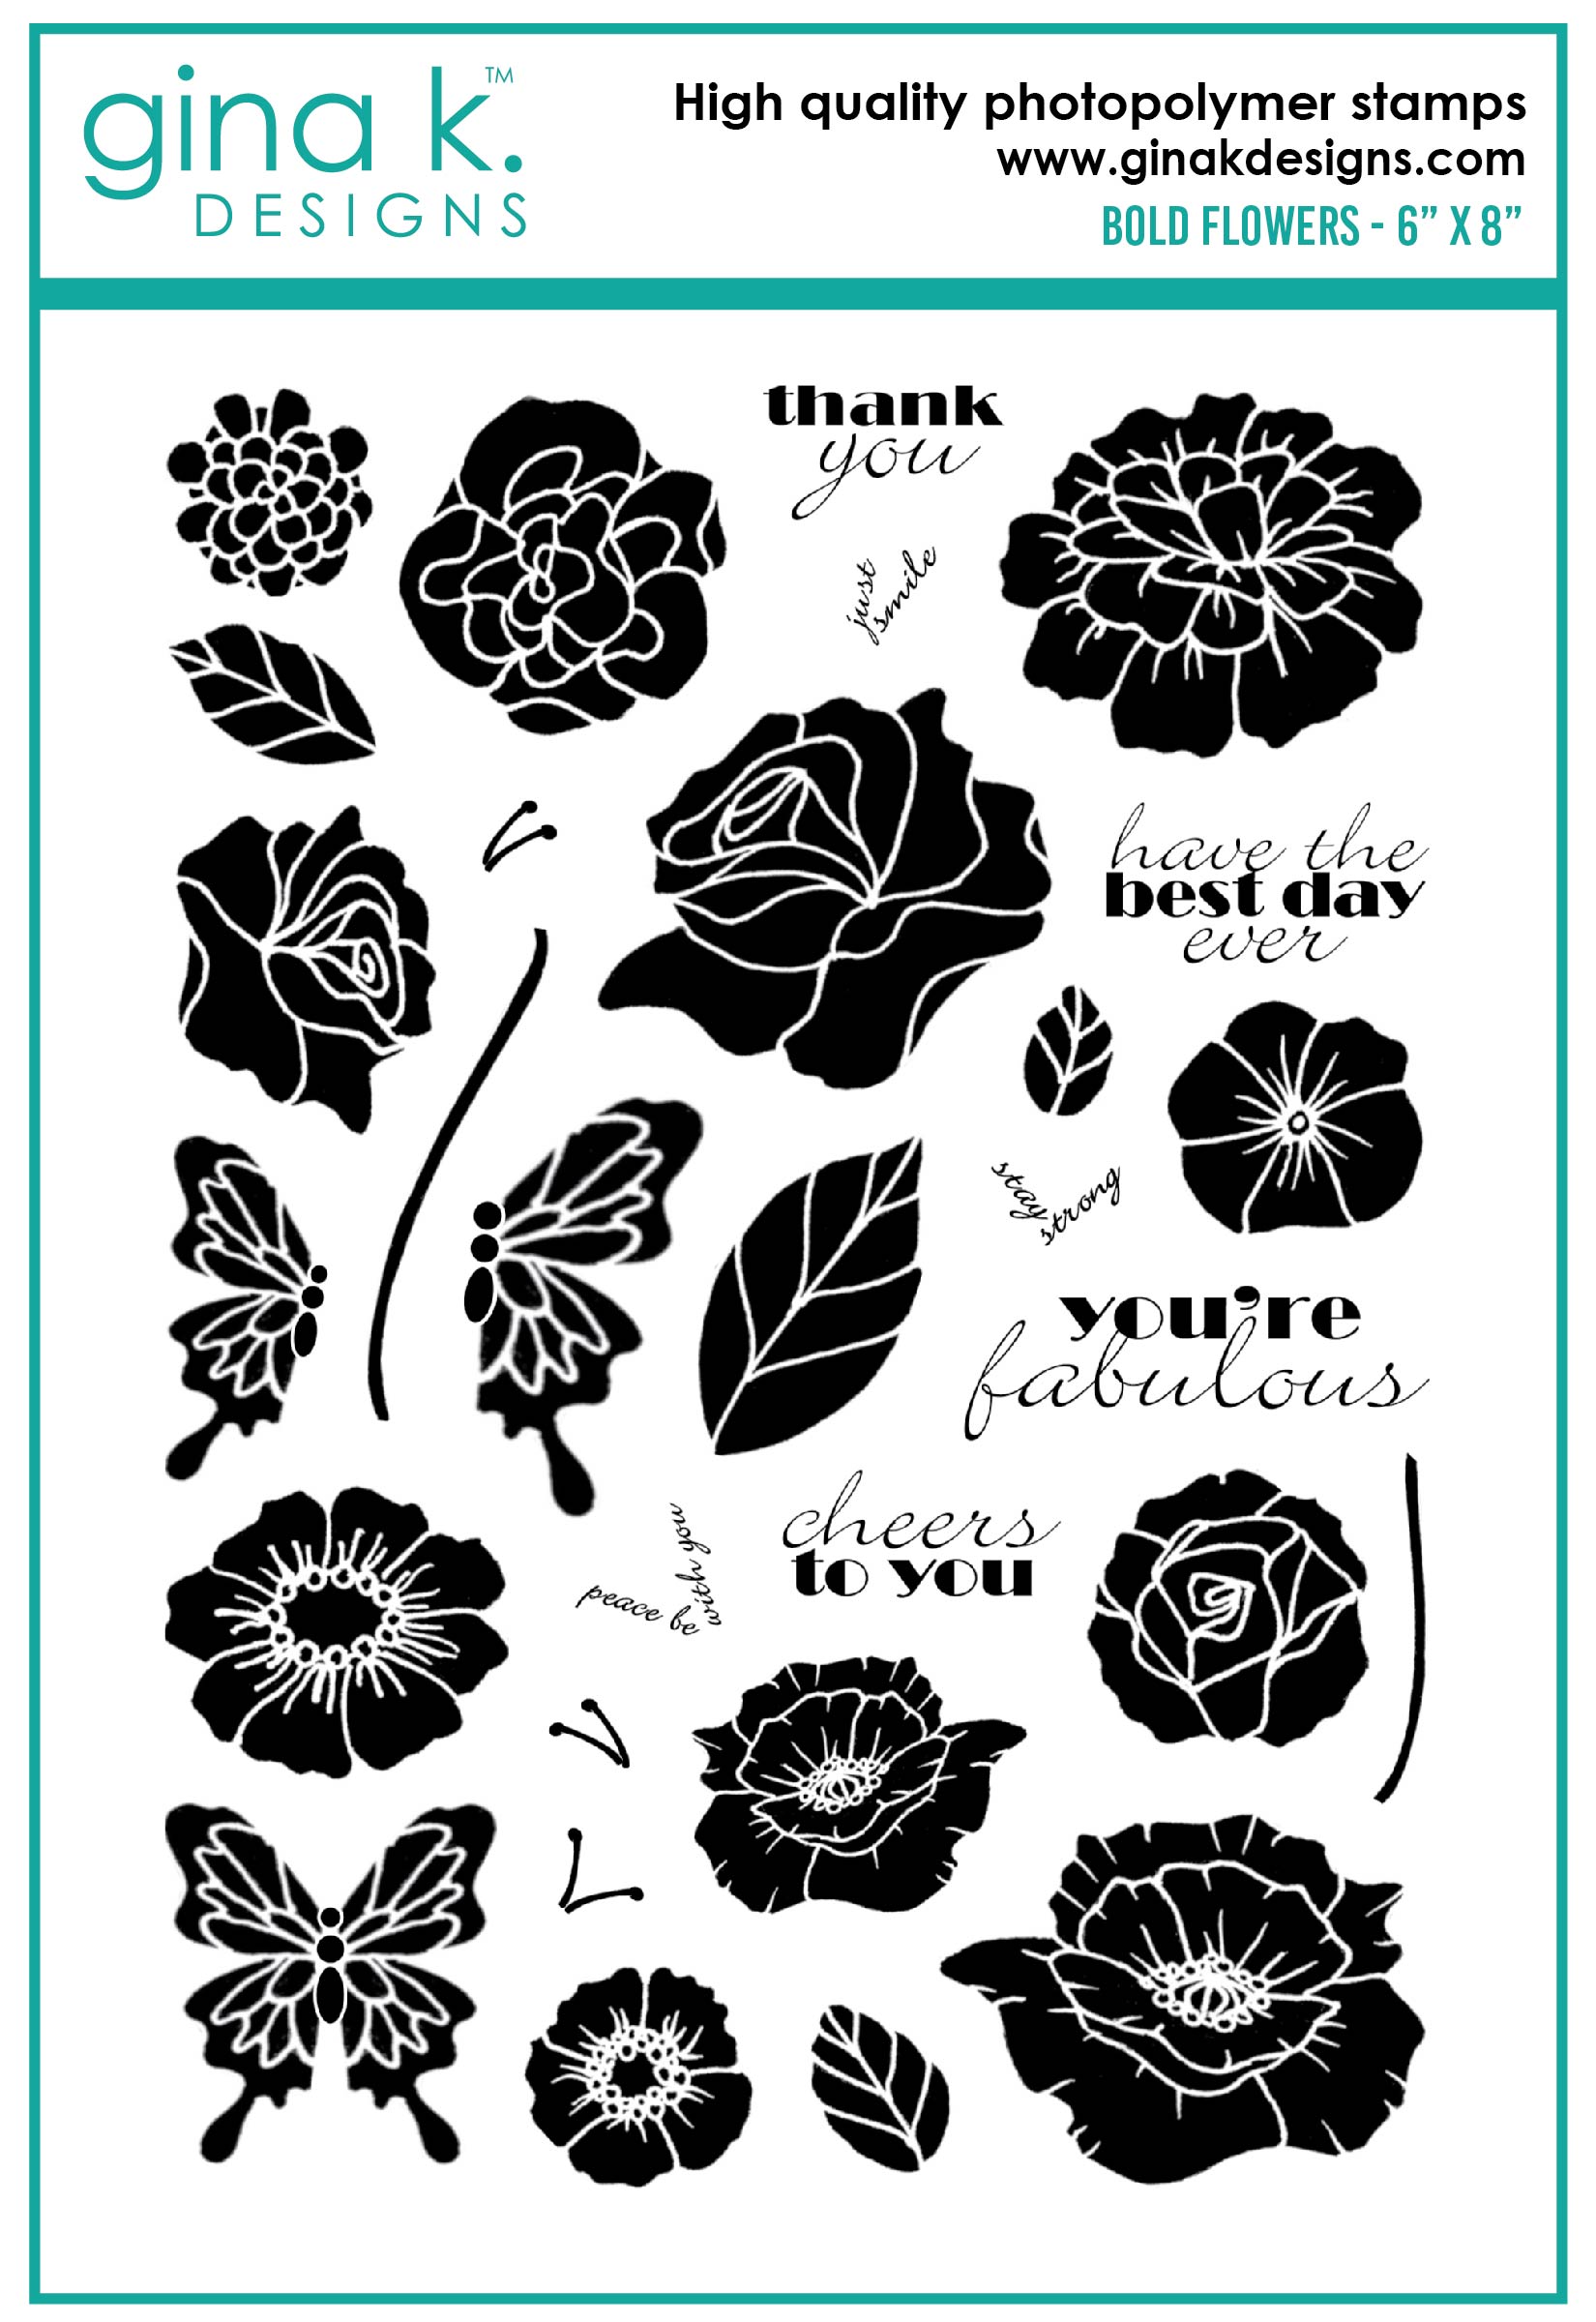 Paper Rose - 6 x 6 Stencils - Floral Borders